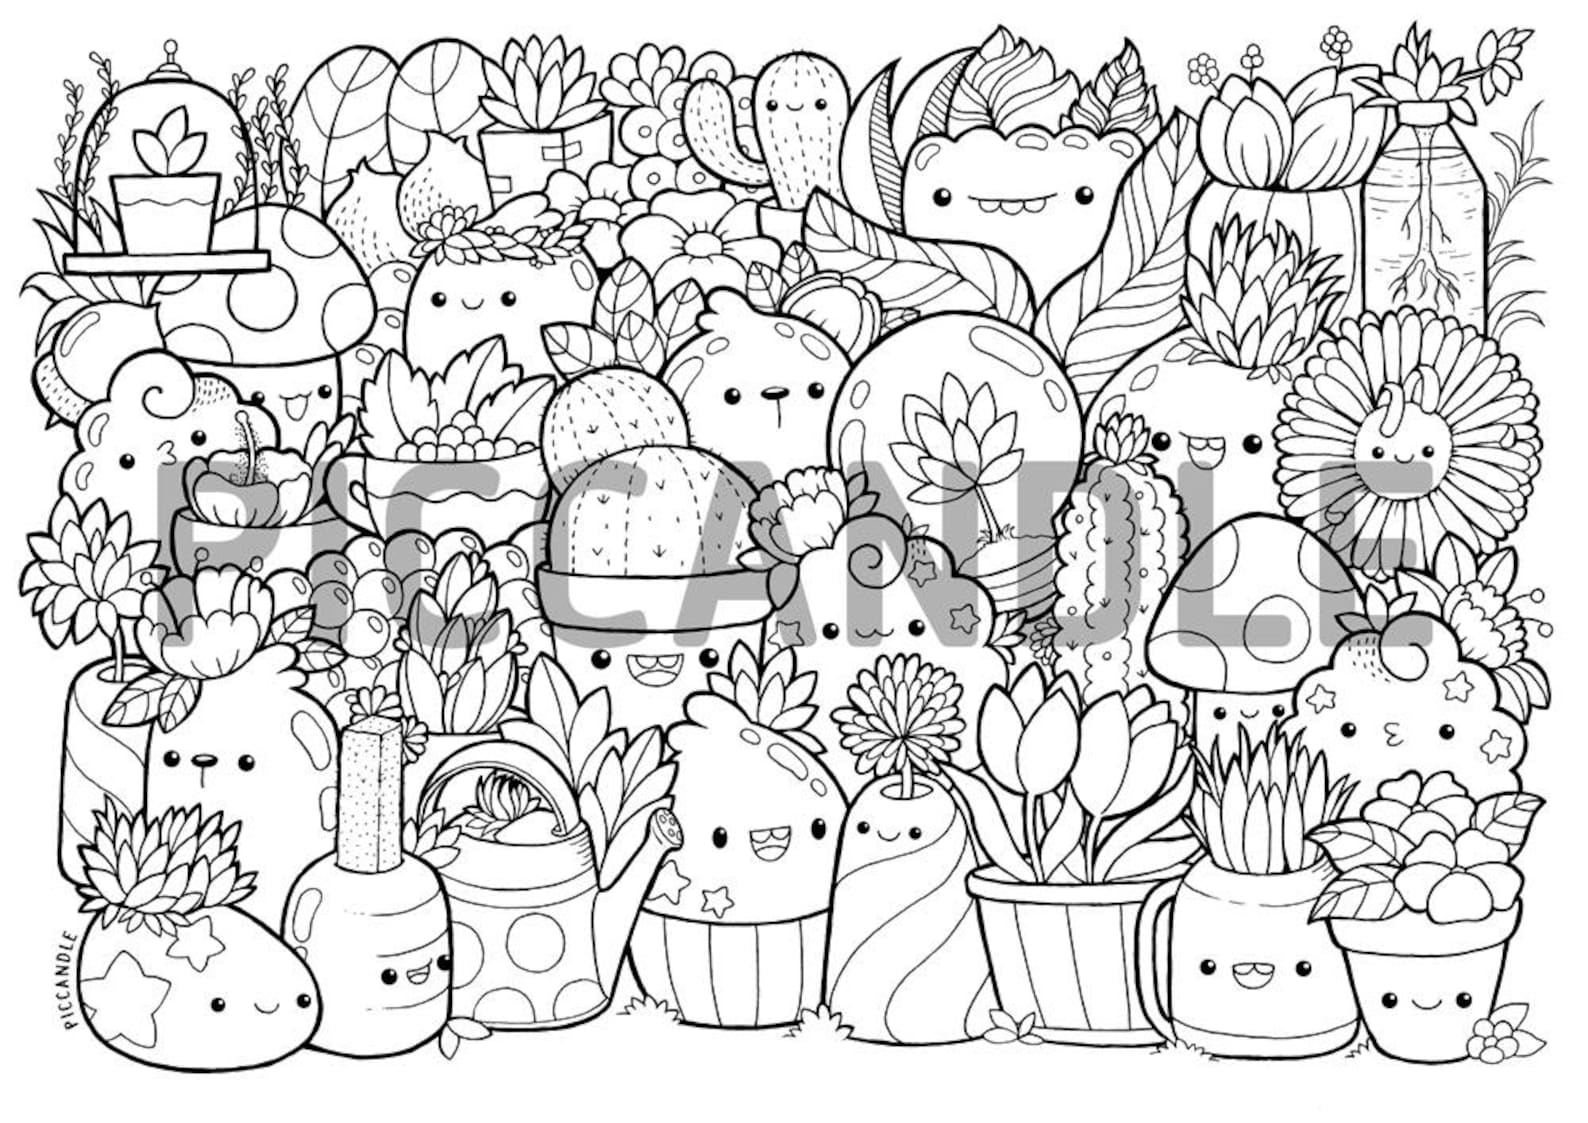 Plants Doodle Coloring Page Printable Cute/Kawaii Coloring | Etsy